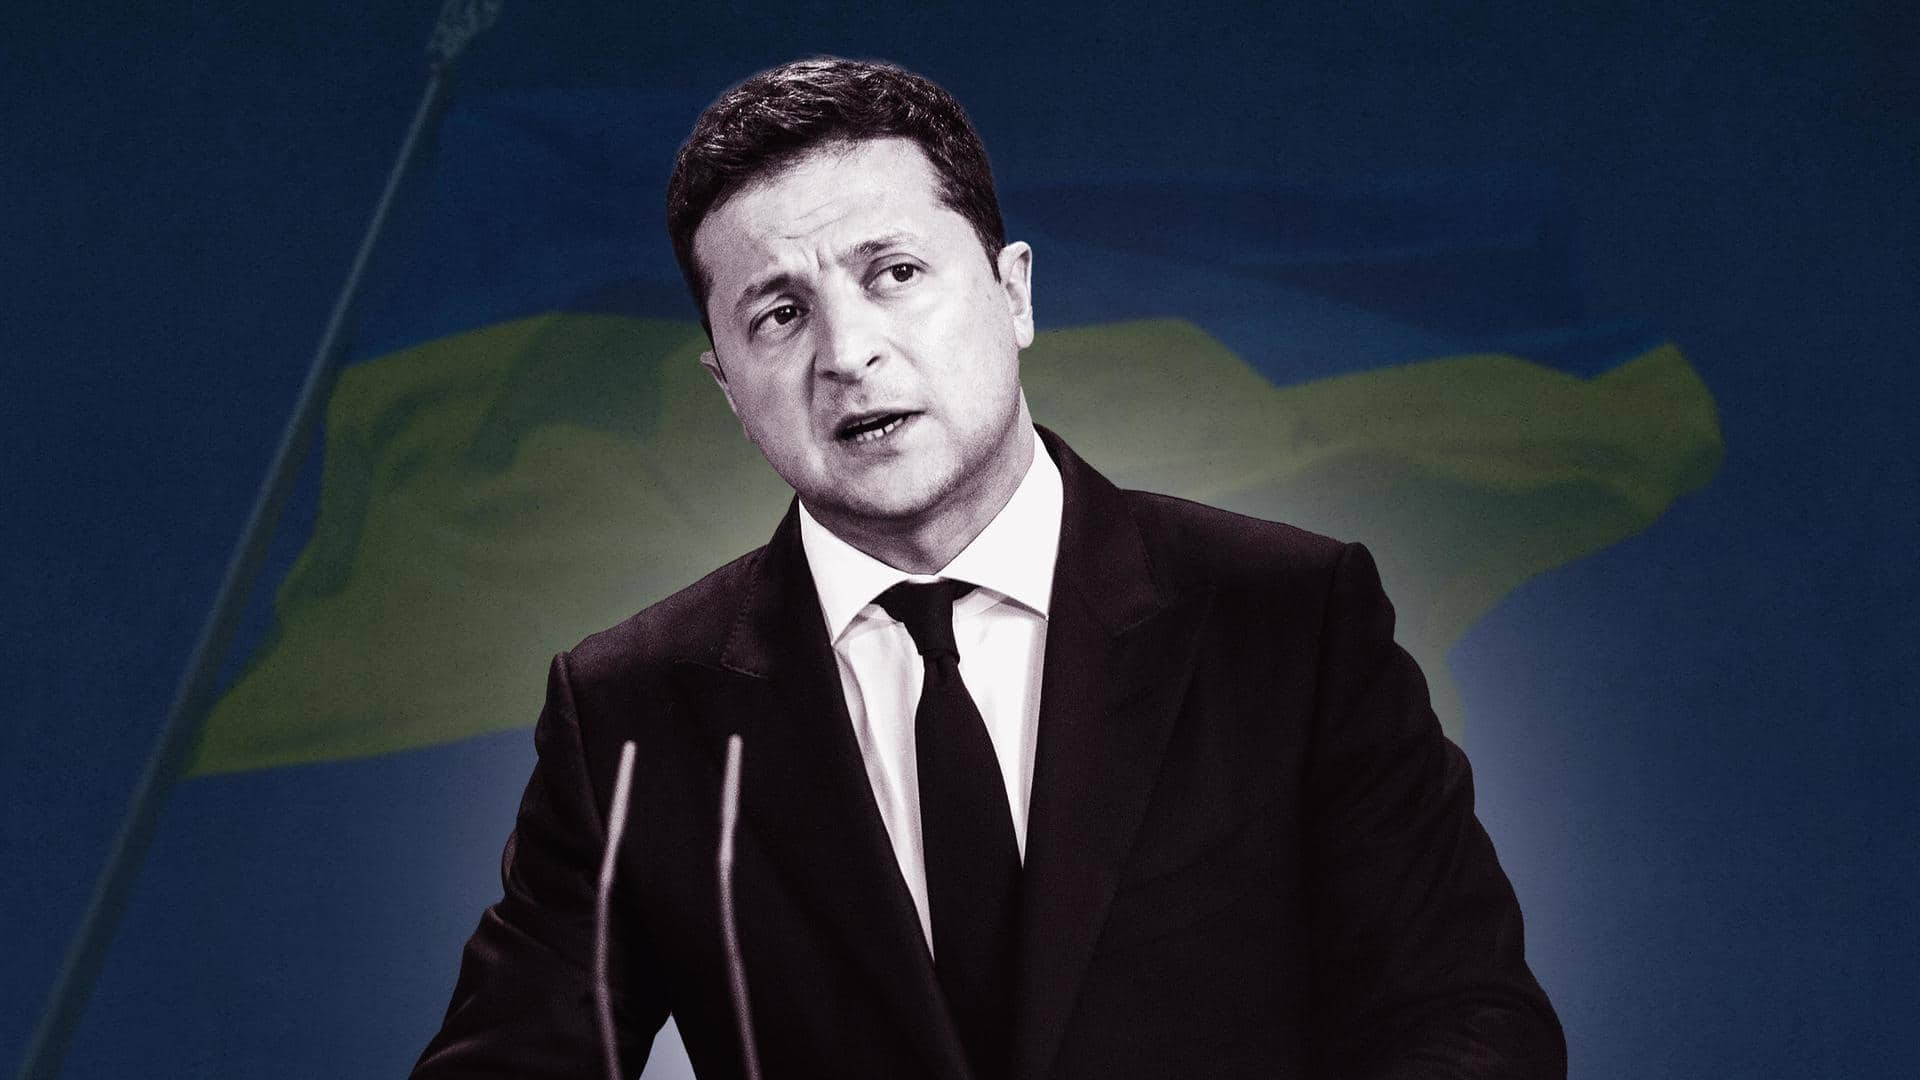 Ukraine ready for counteroffensive against Russia: President Volodymyr Zelenskyy